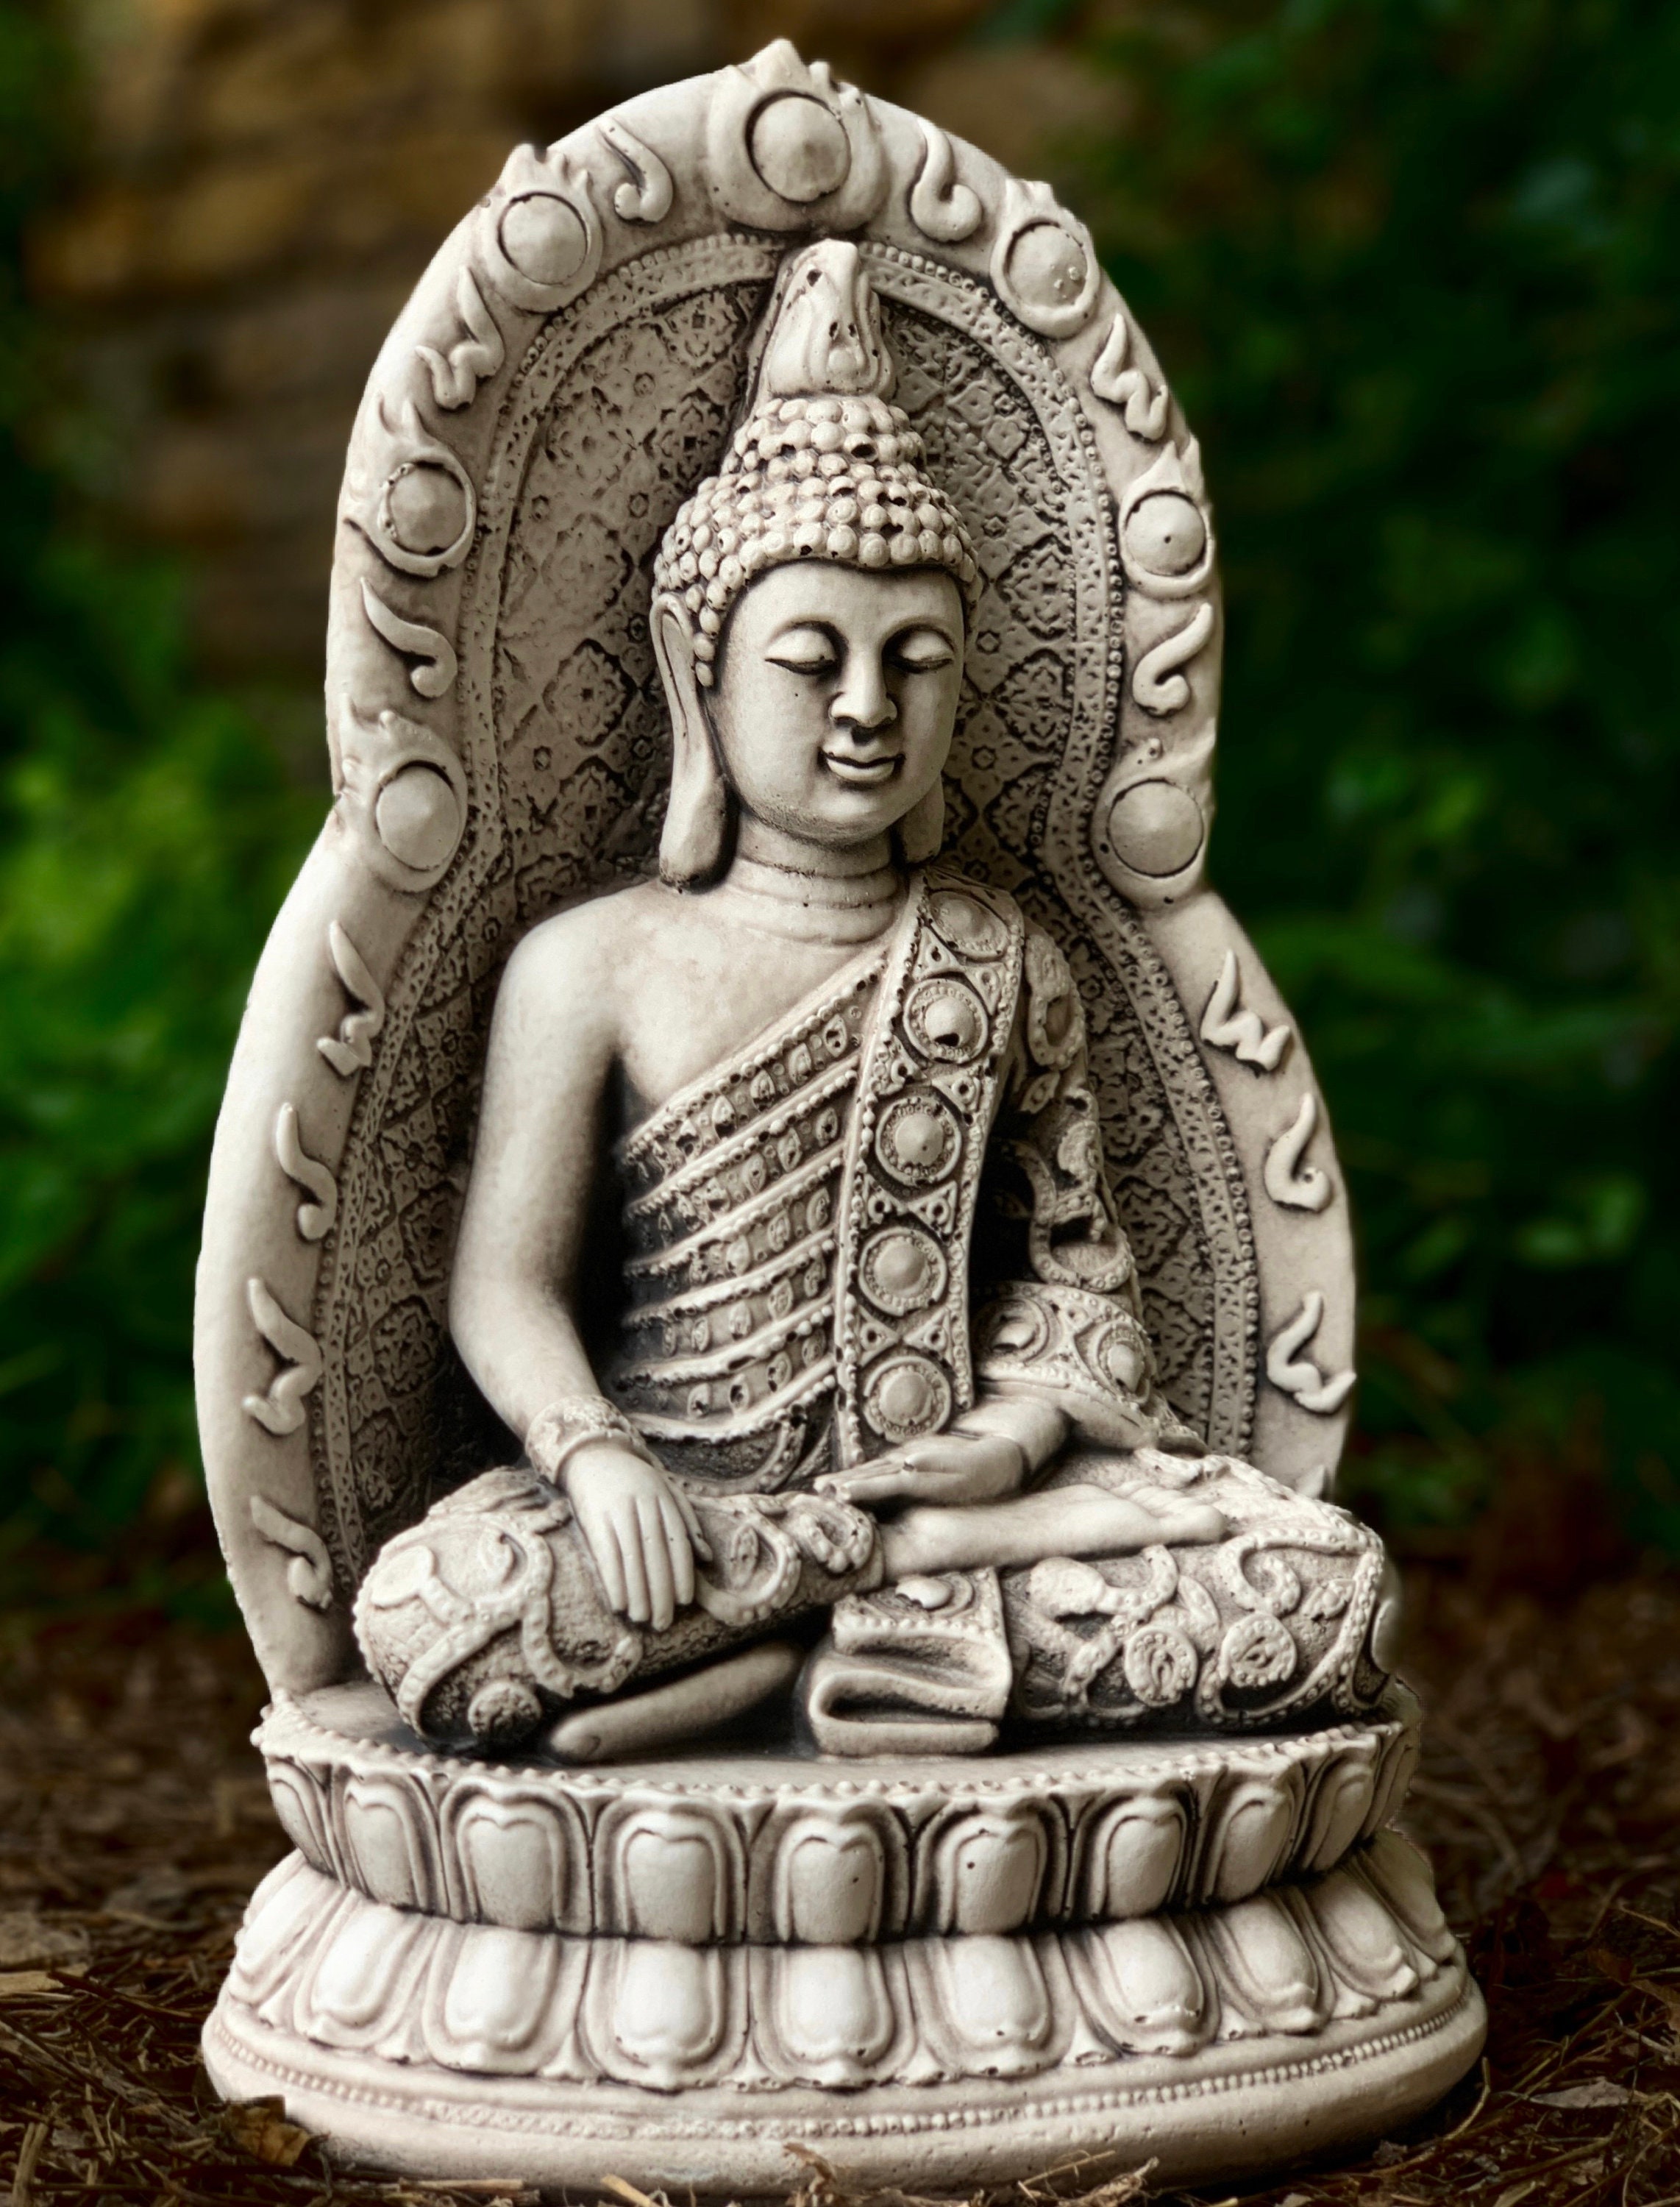 Meditation Buddha Concrete Statue Copper Style Home or Garden Decor,  Buddhism, Garden Buddha, Cement Buddha, Concrete Buddha, Zen Garden -   Canada